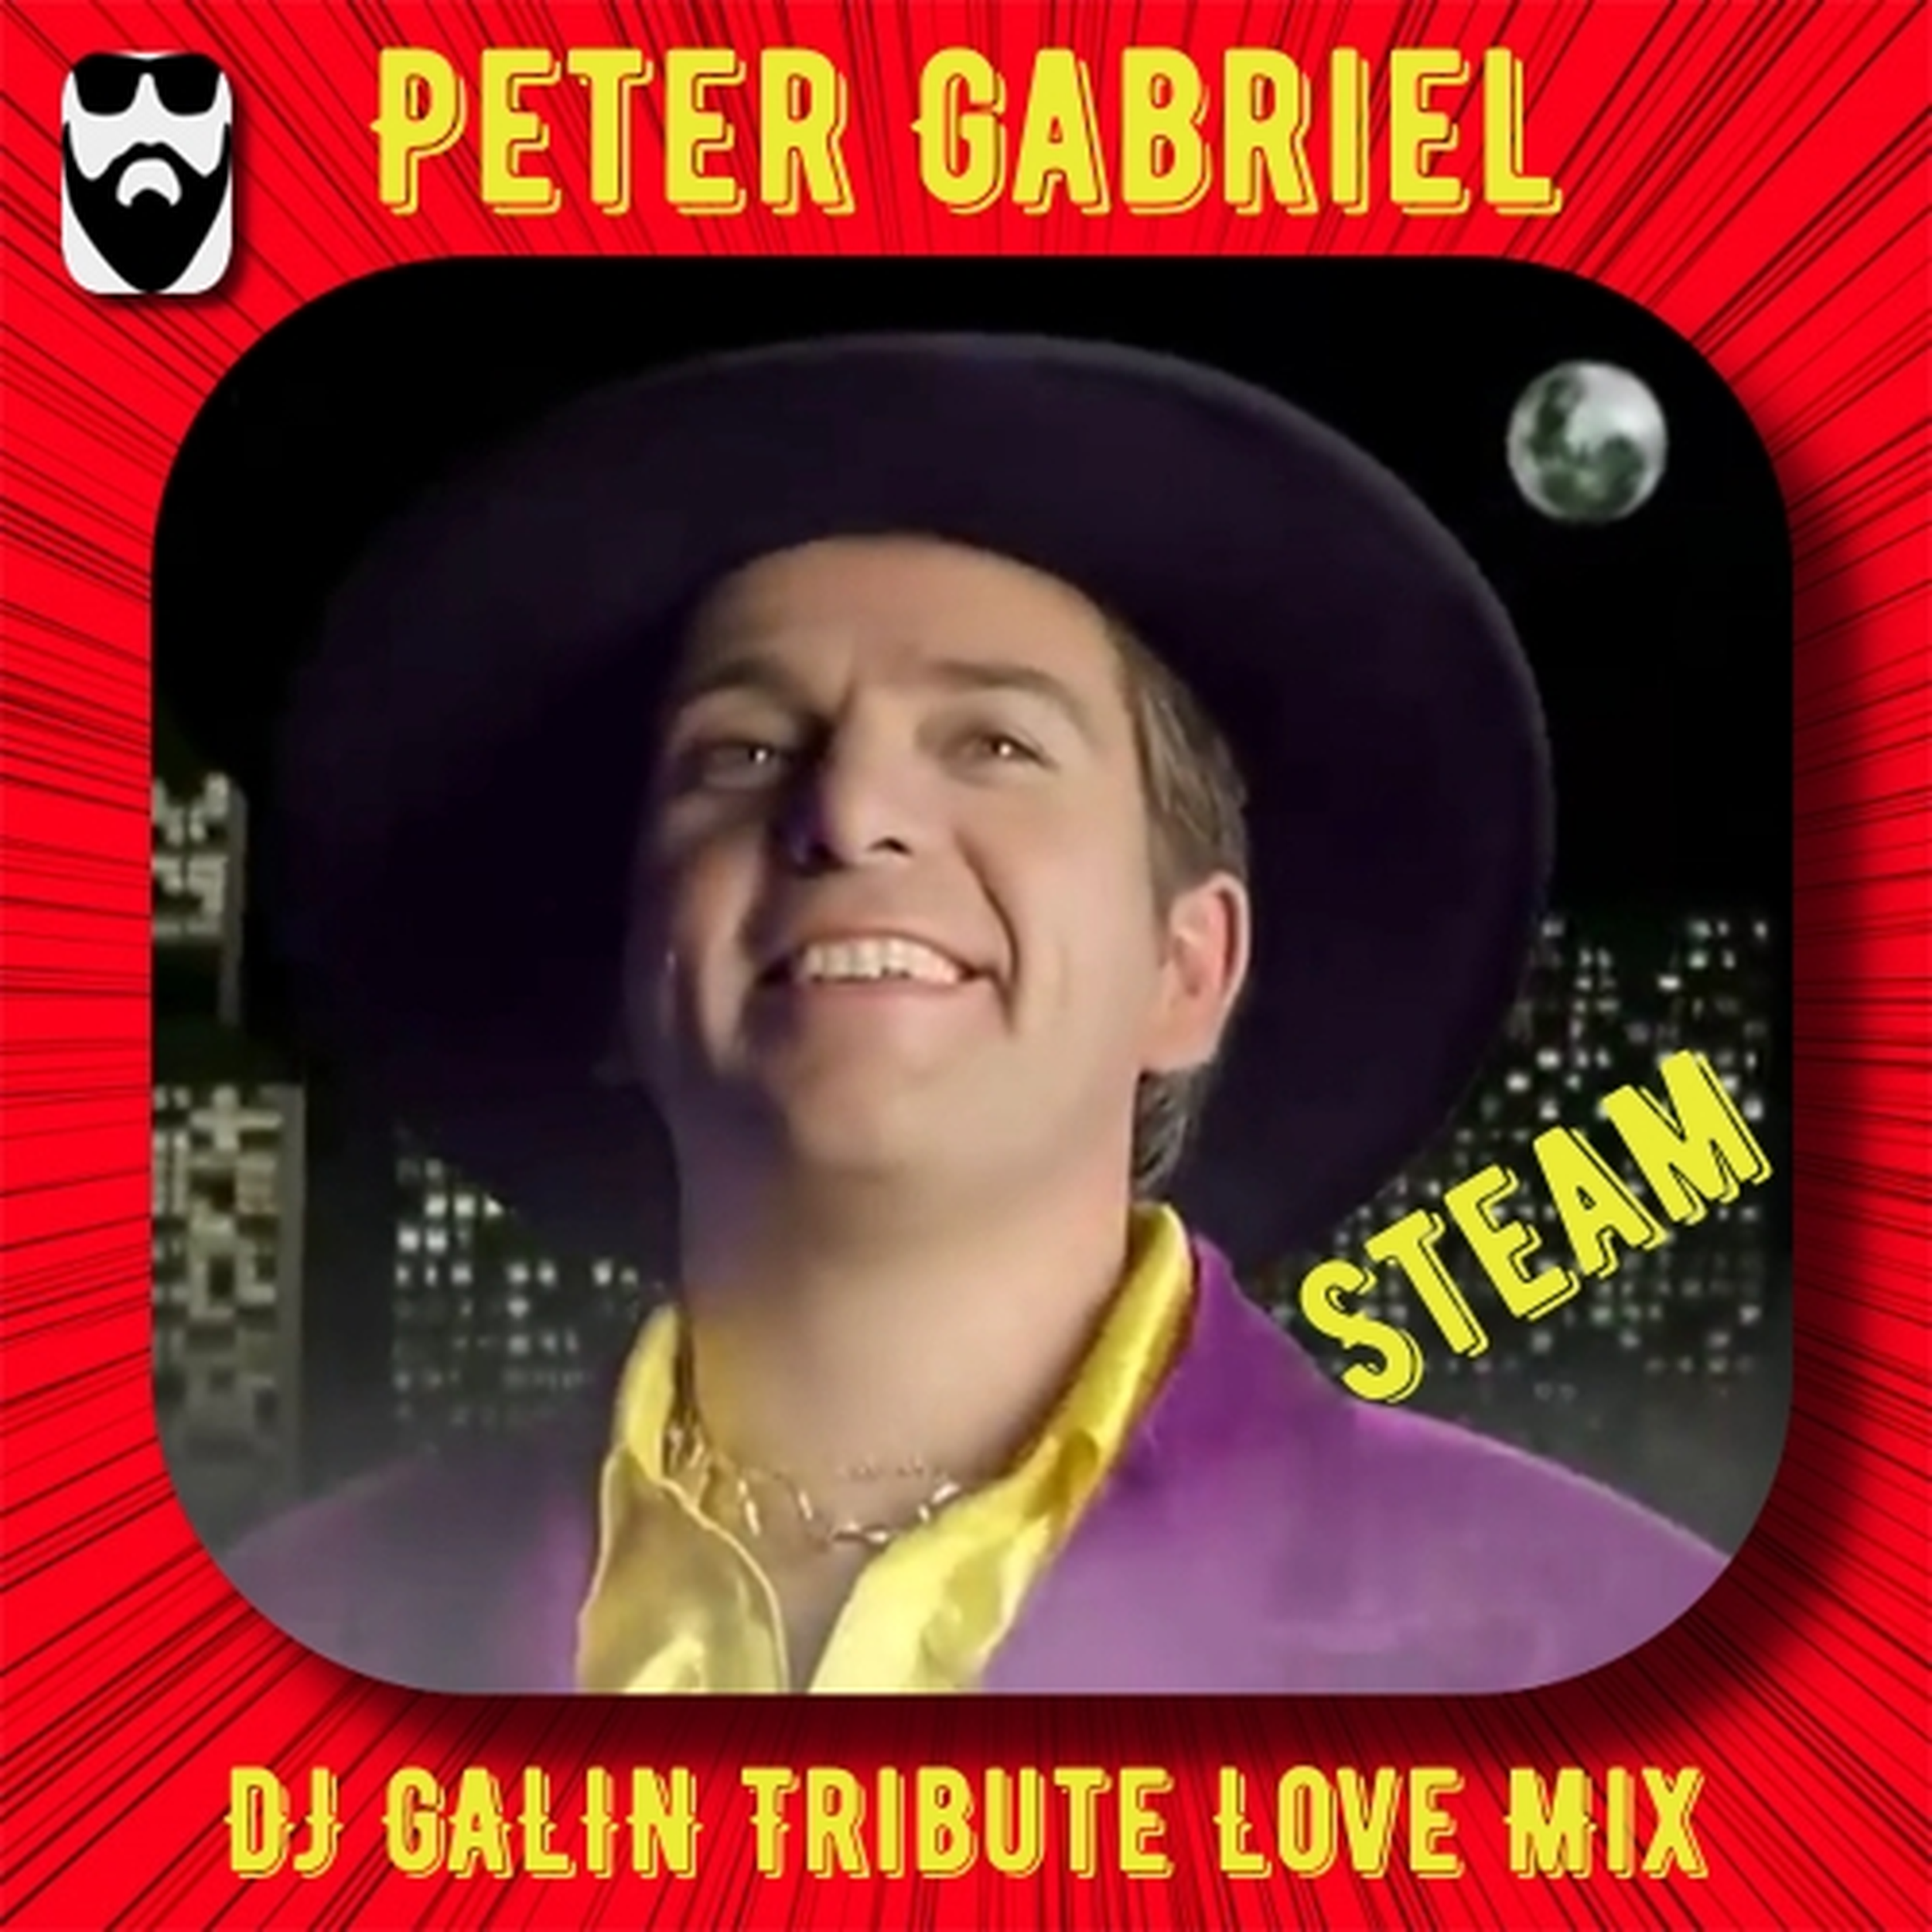 Peter gabriel steam слушать фото 4